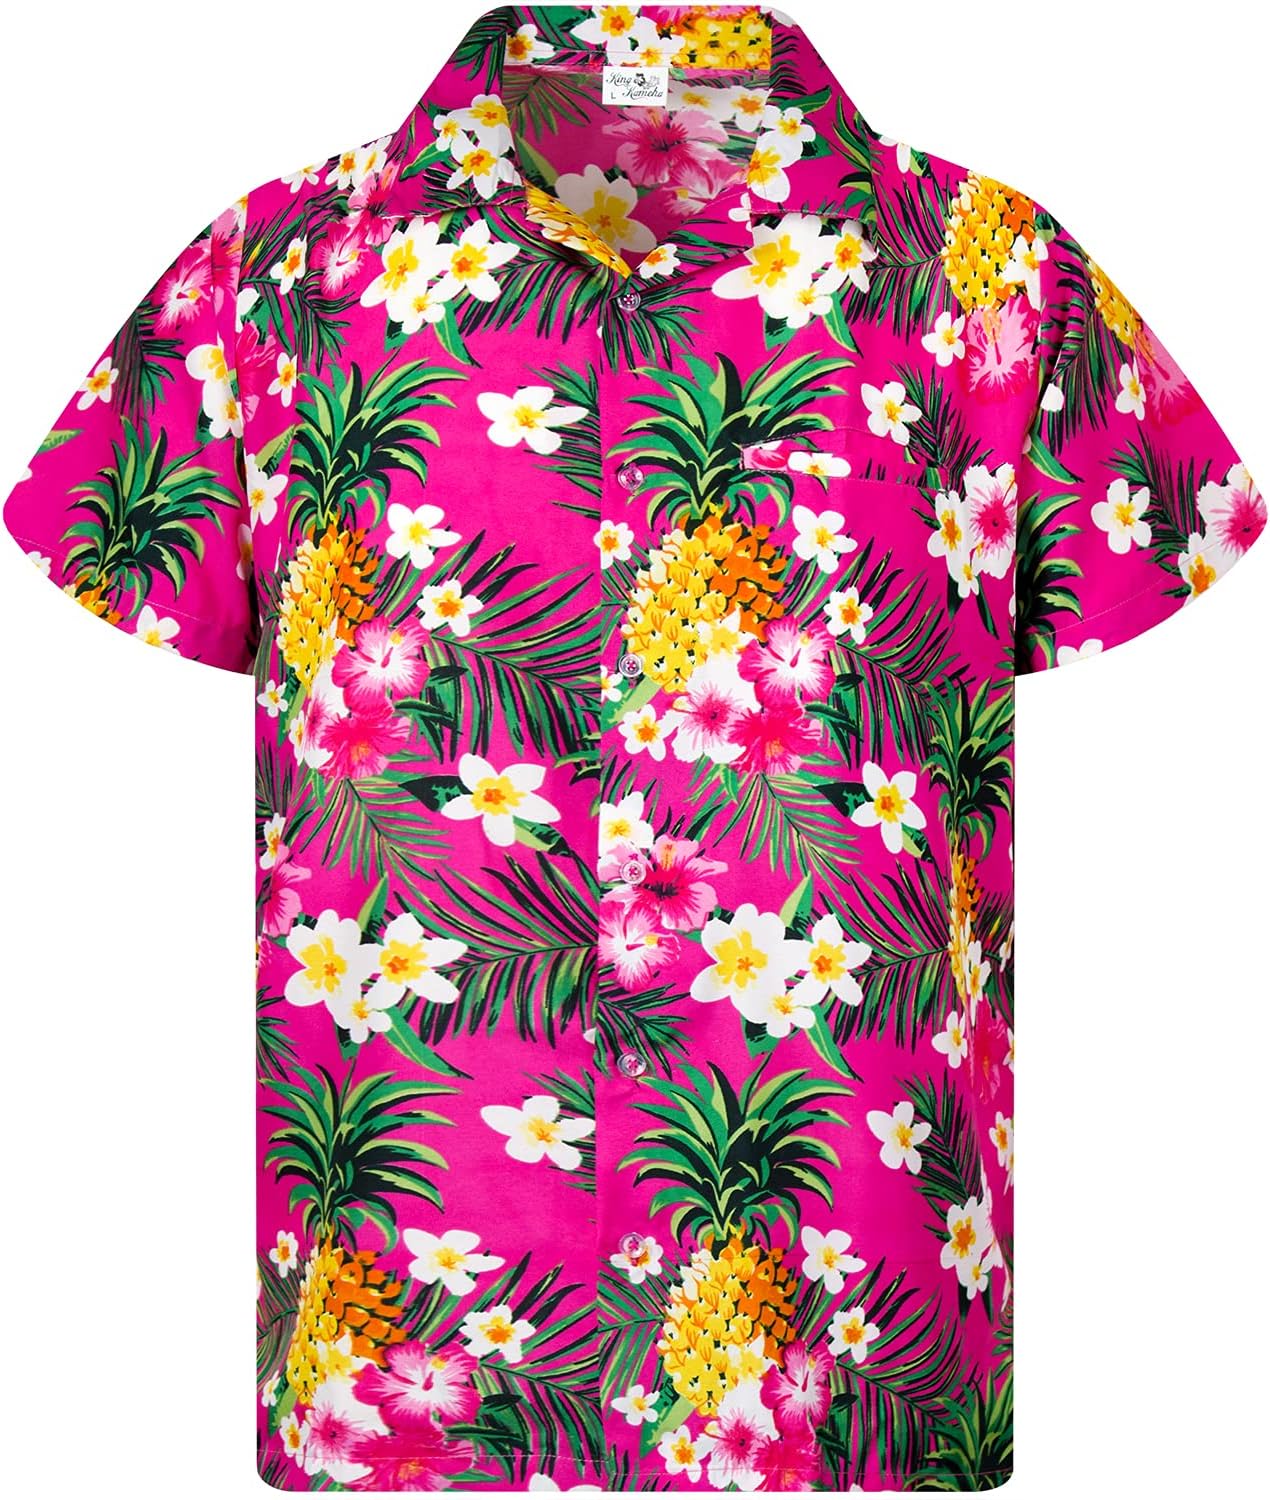 KING KAMEHA Funky Casual Hawaiian Shirt for Men Front Pocket Button Down Very Loud Shortsleeve Unisex Pineapple Flowers Print